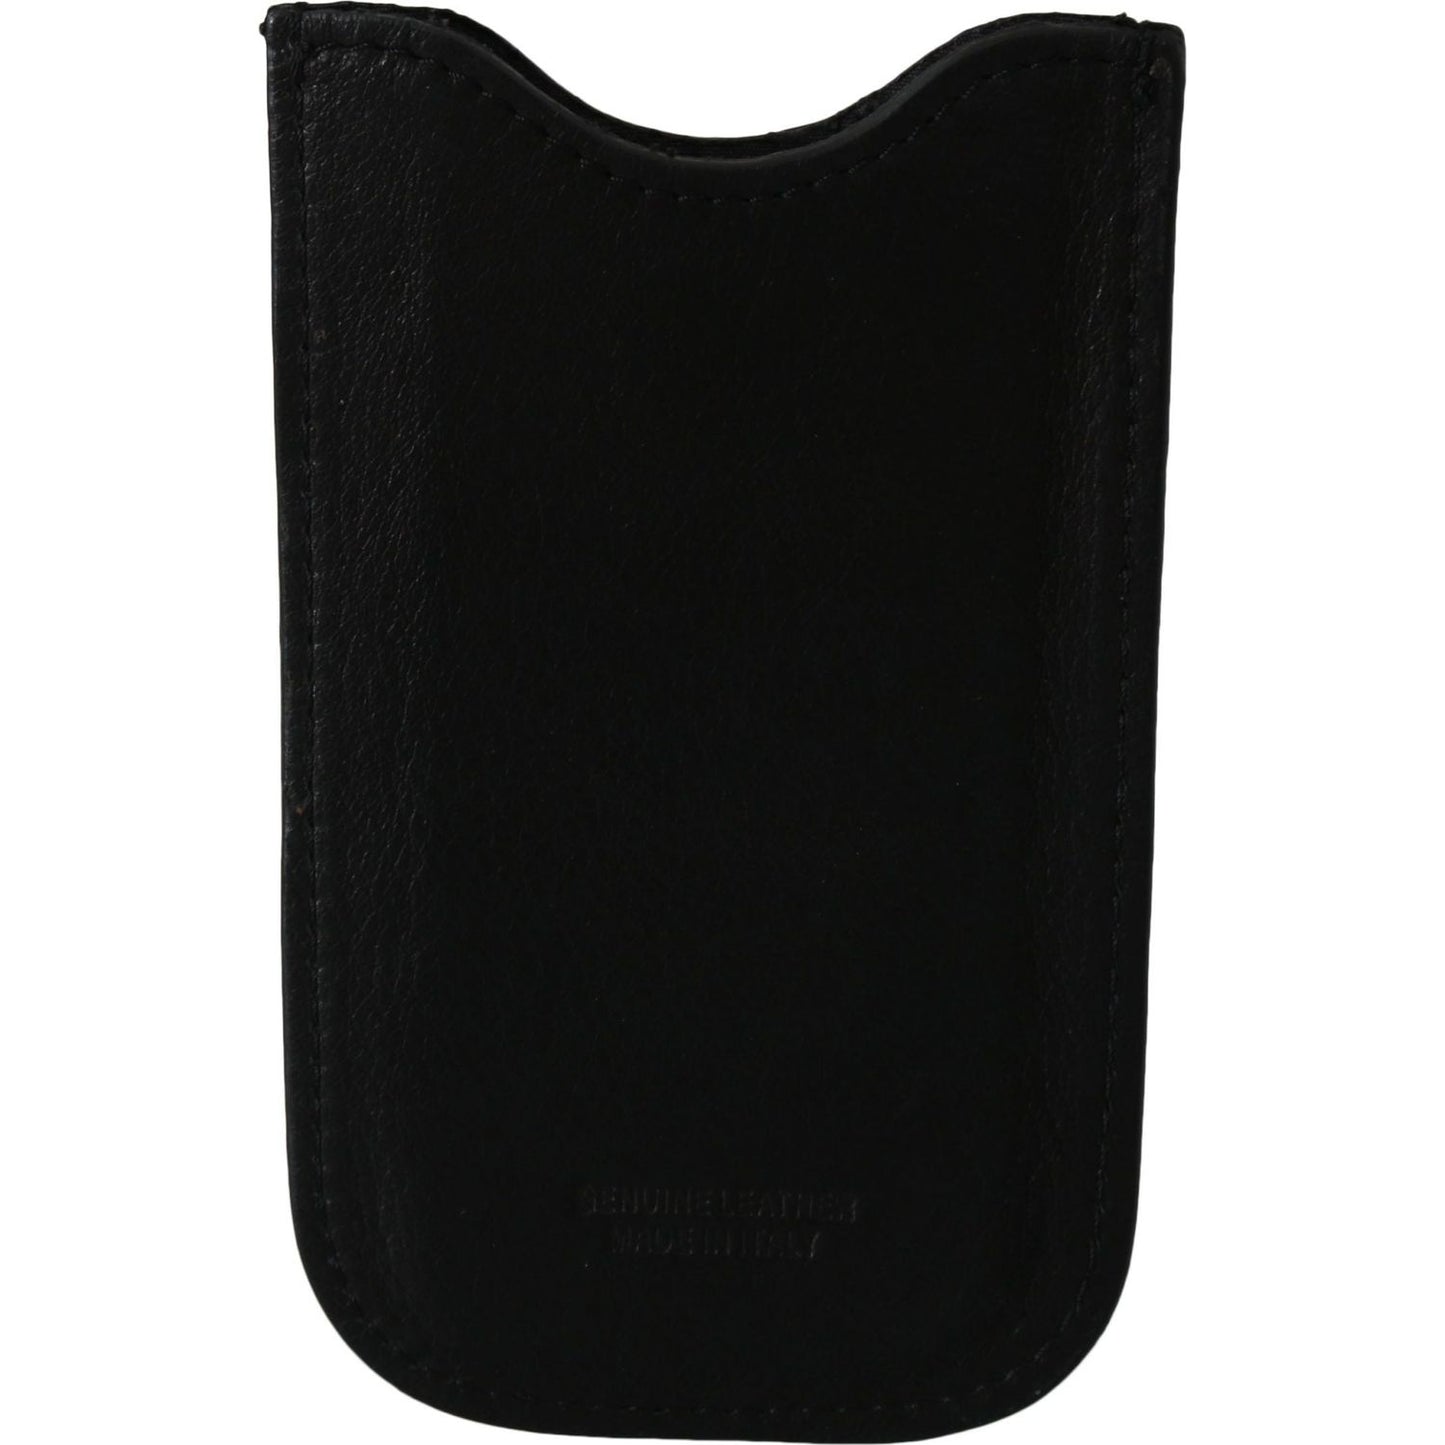 John Galliano Elegant Black Genuine Leather Men's Wallet black-leather-multifunctional-men-id-bill-card-holder-wallet Wallet IMG_1773-scaled-fc1b9ba5-393.jpg